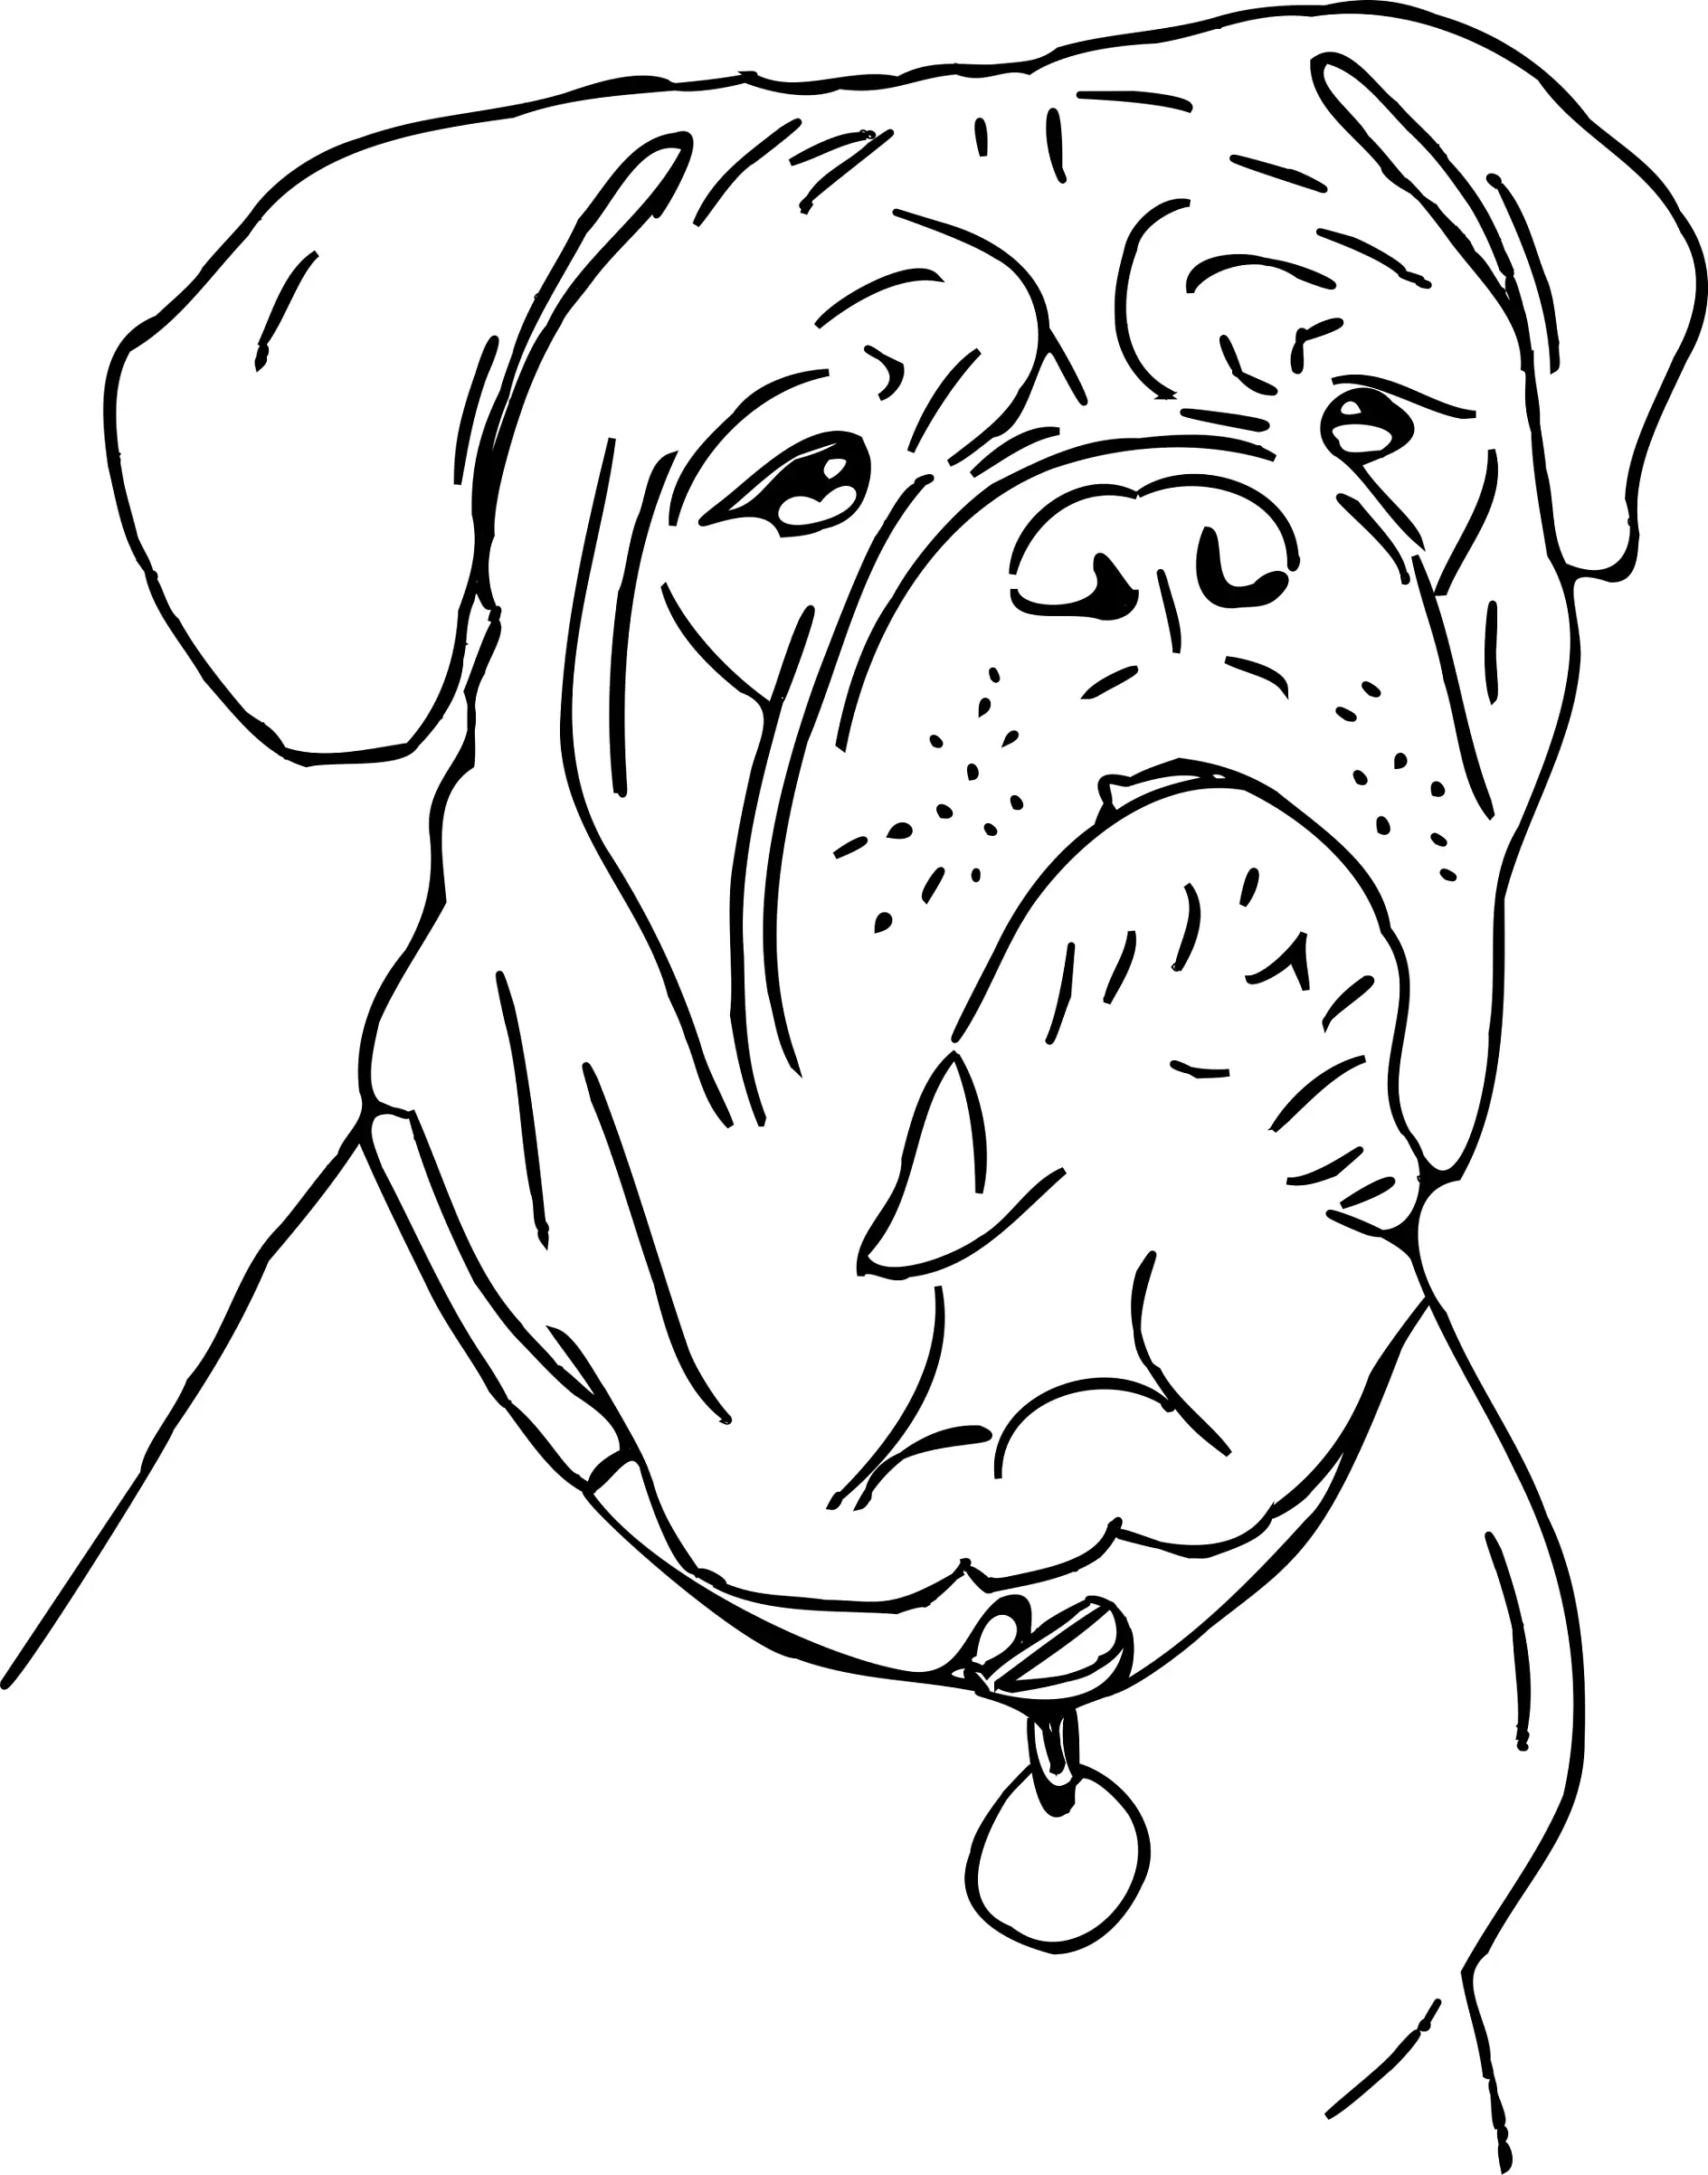 Ausmalbild Kopf eines Bulldoggen Hundes